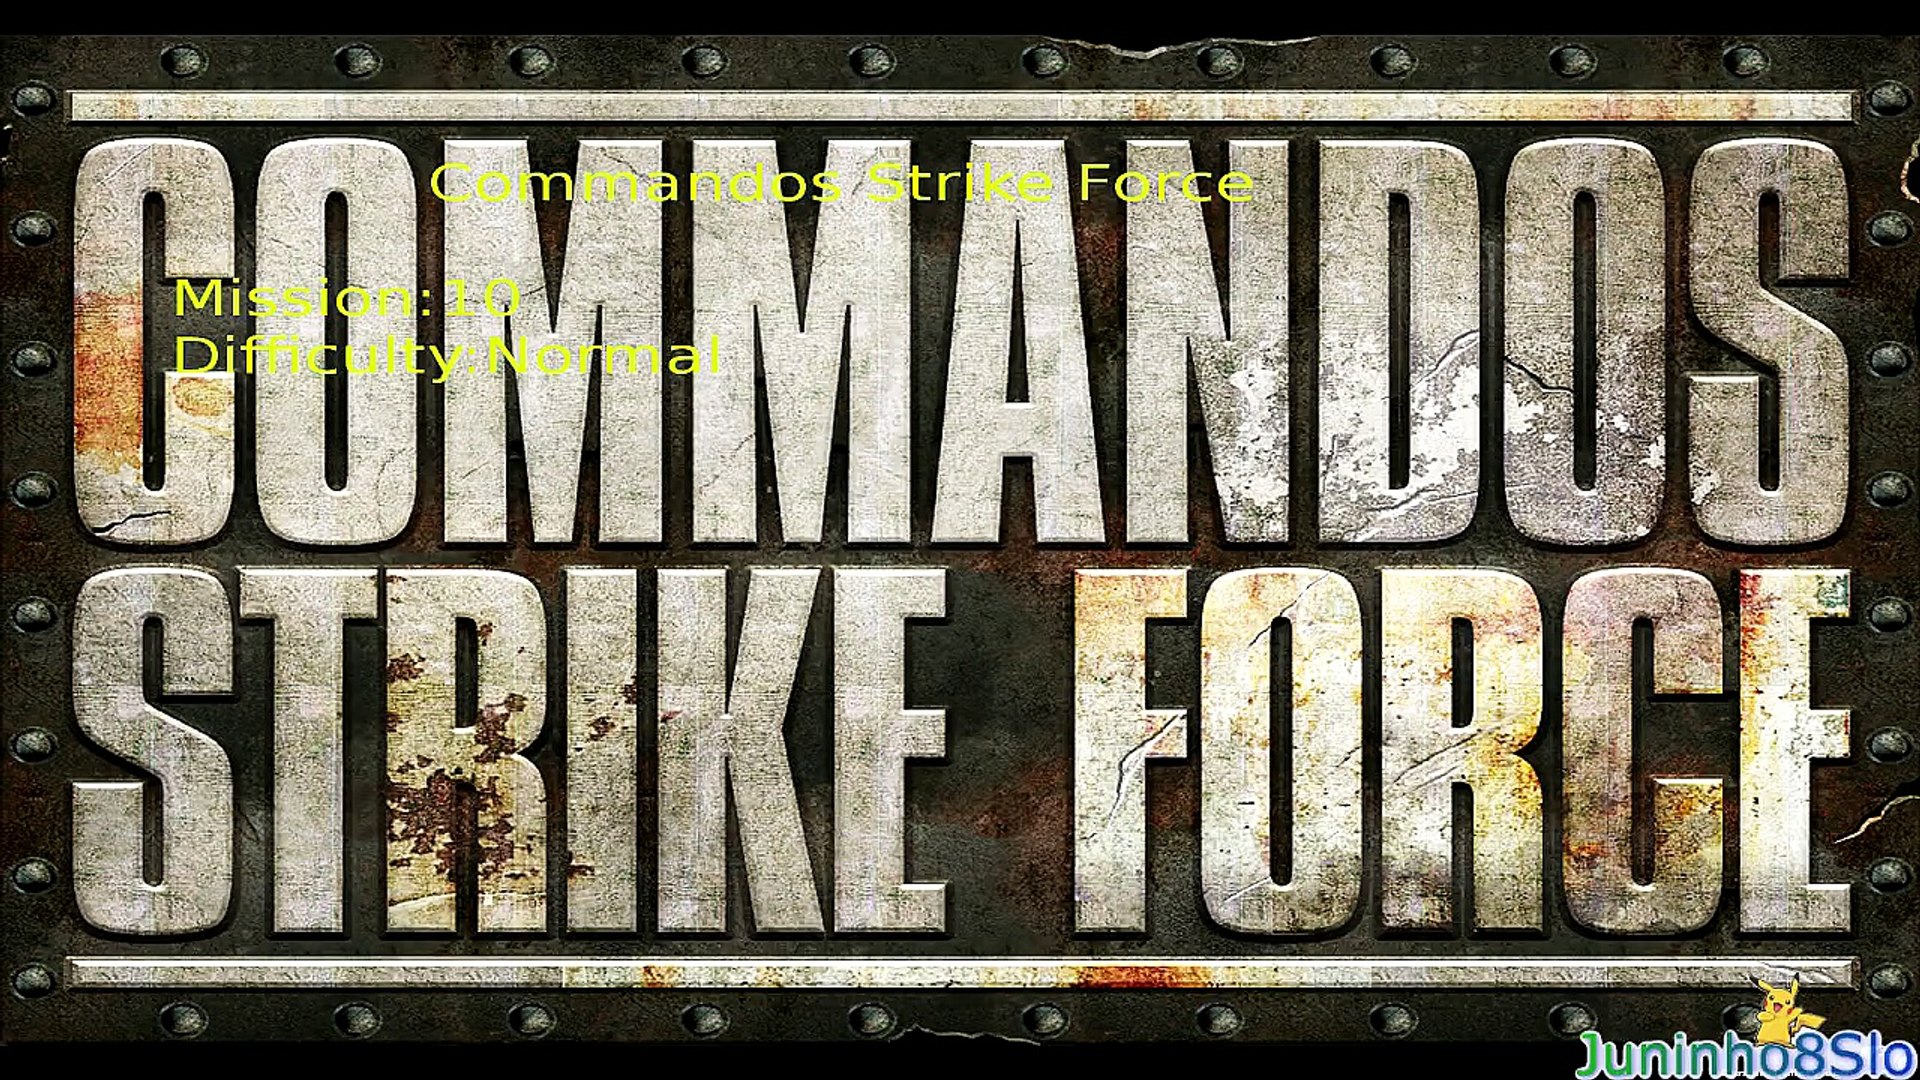 commandos 2 free full version pc